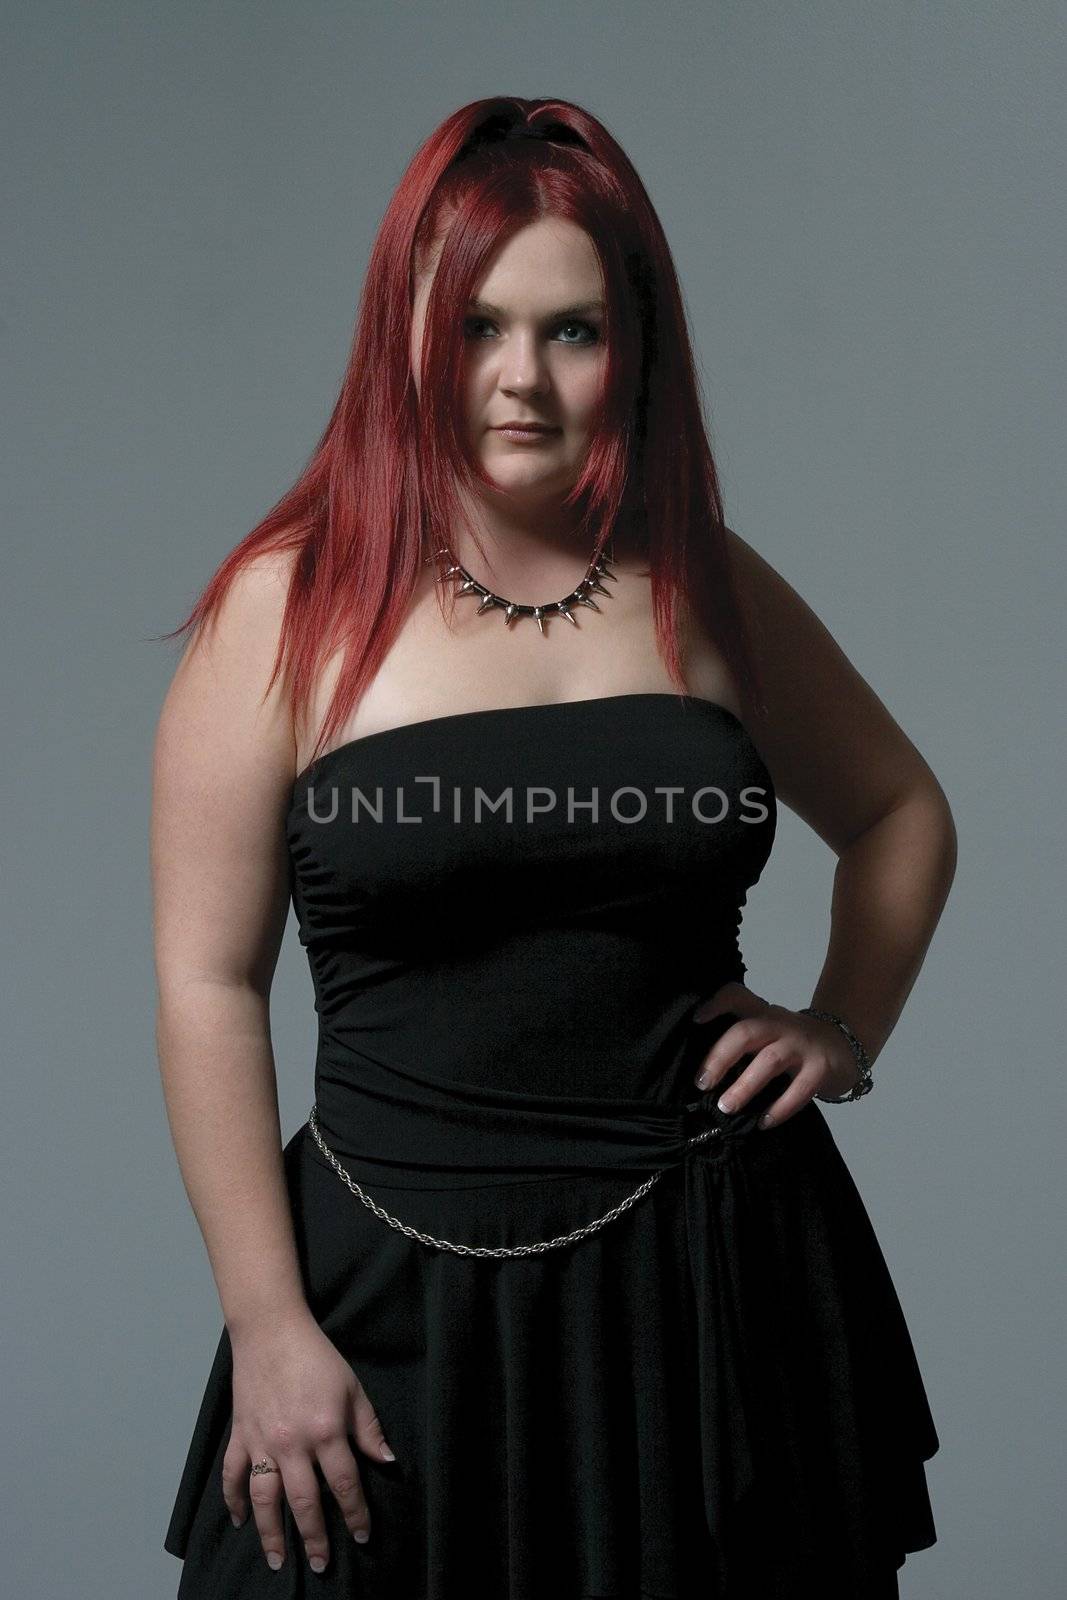 Red hair rock goth female model